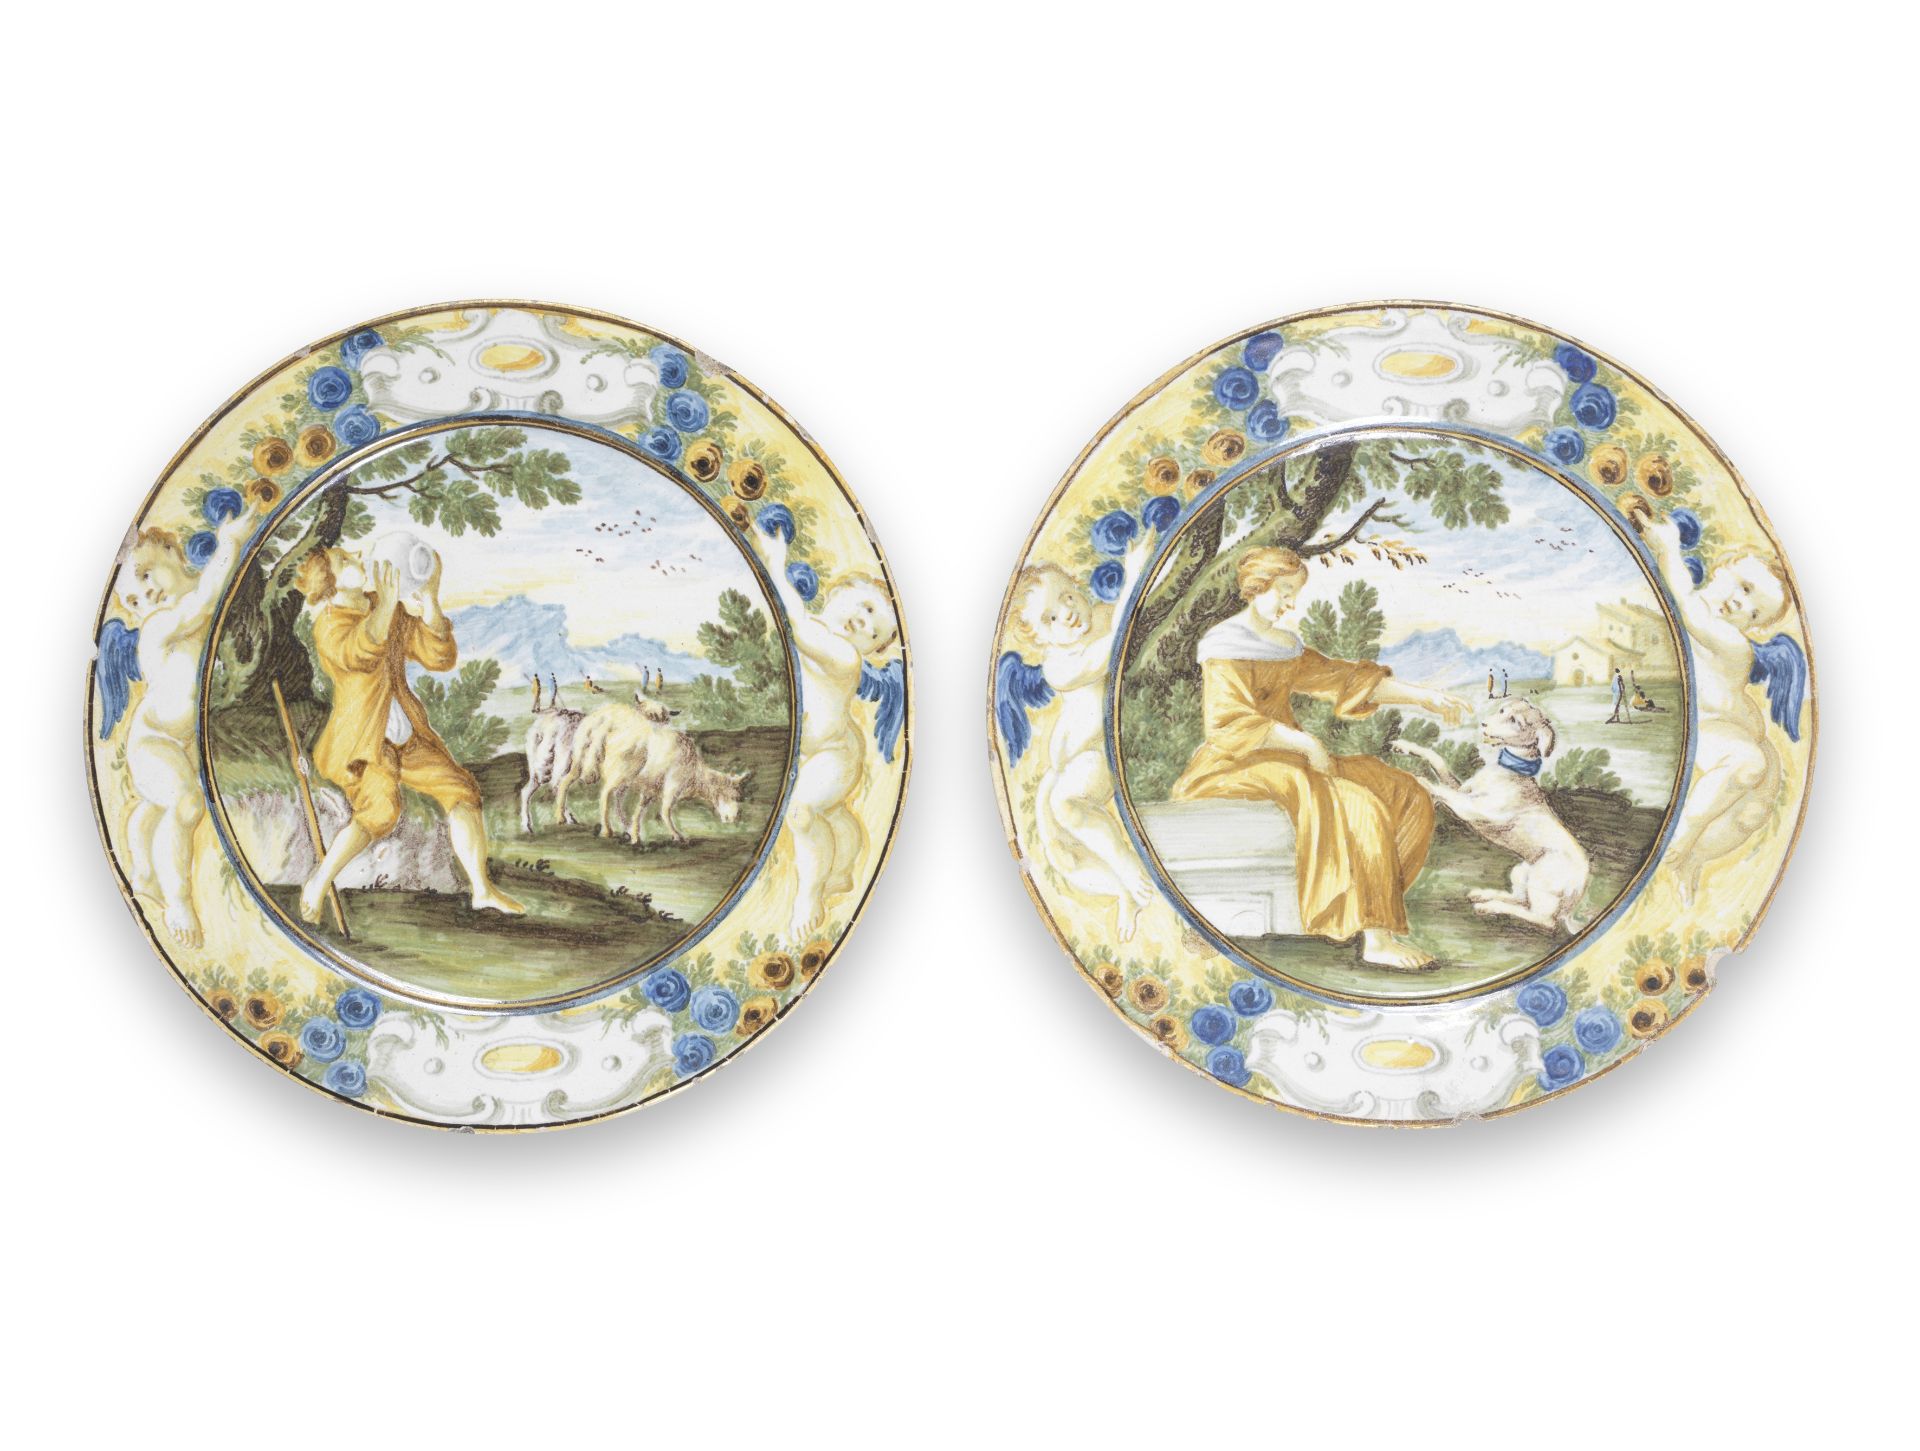 Two small Castelli maiolica plates, first half 18th century